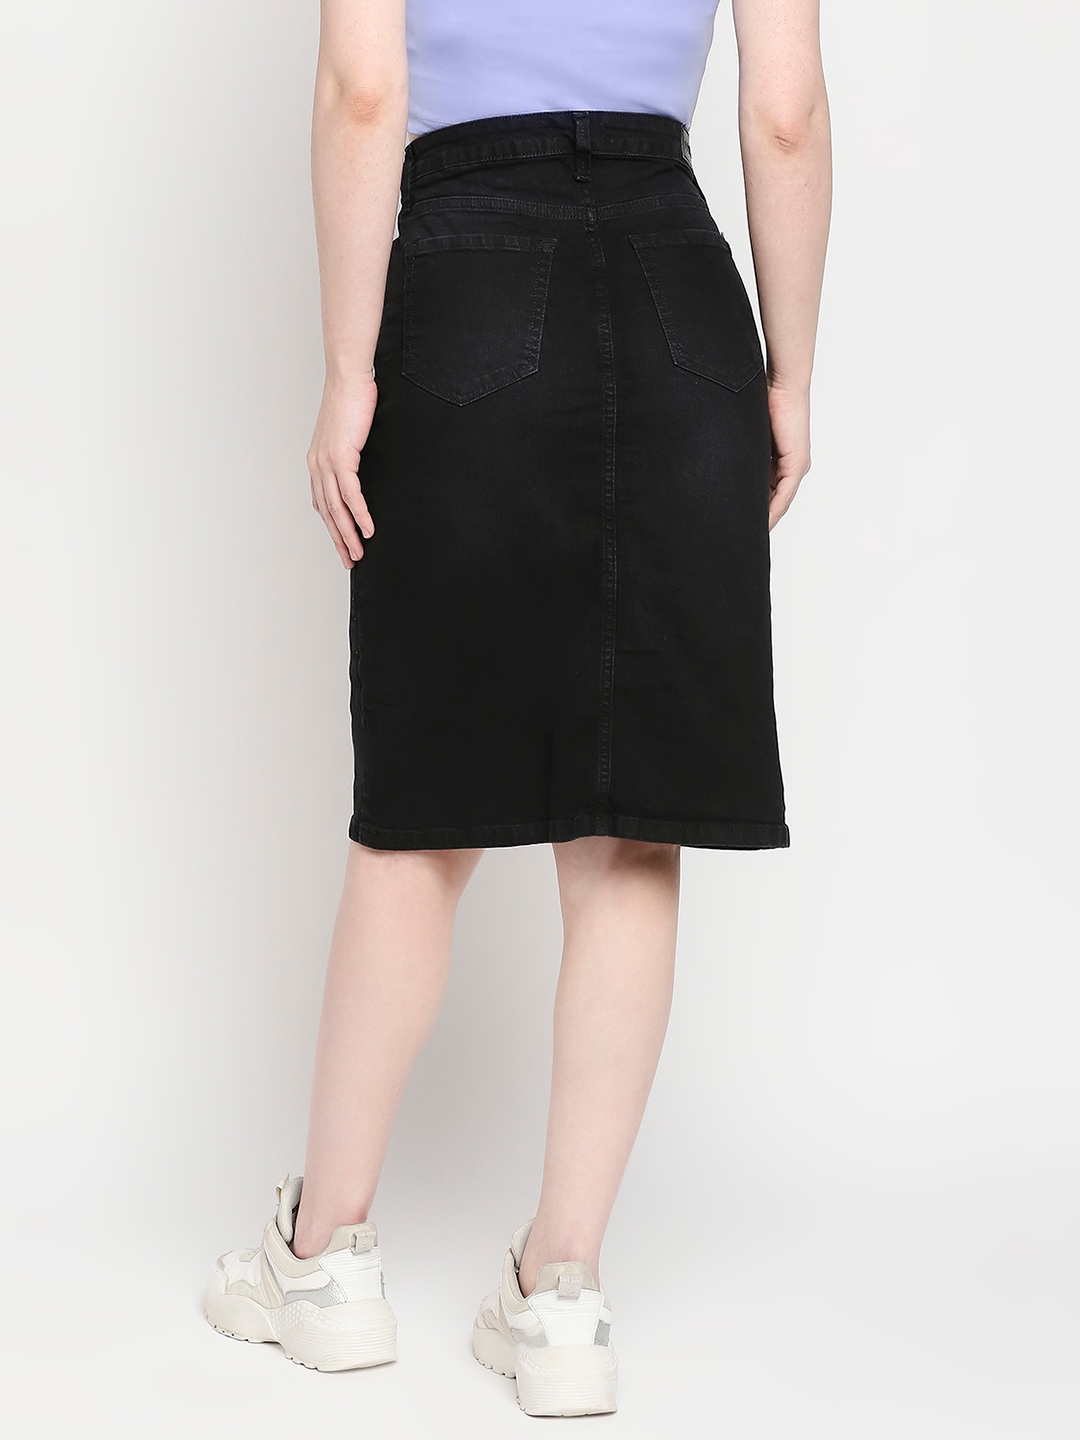 spykar | Women's Black Cotton Solid Jeans 3